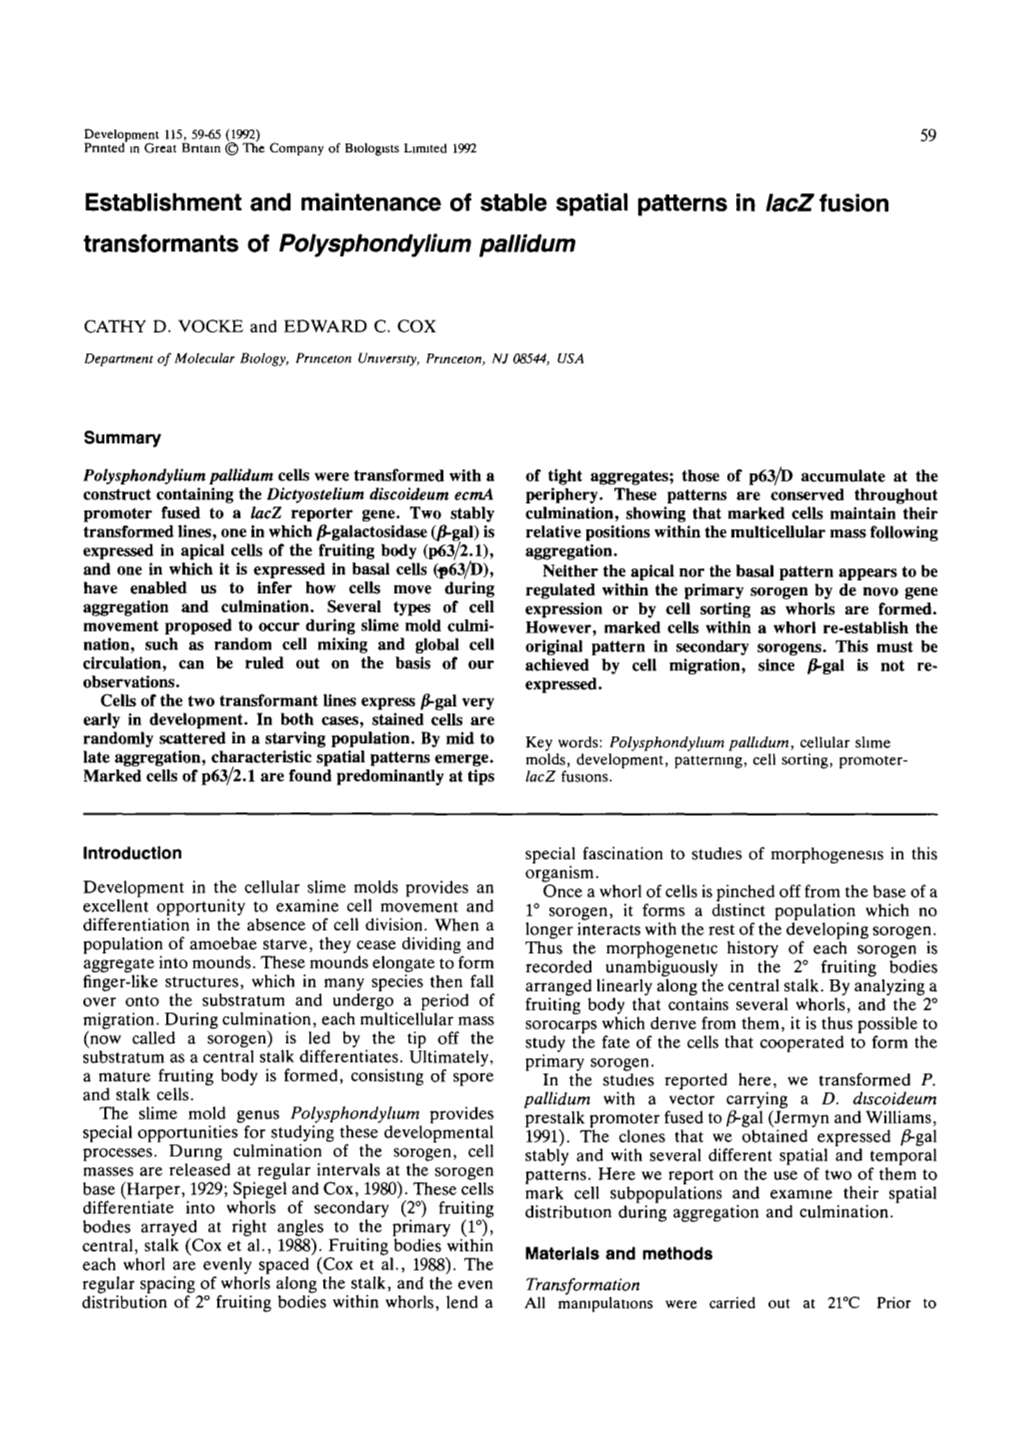 Establishment and Maintenance of Stable Spatial Patterns in Lacz Fusion Transformants of Polysphondylium Pallidum